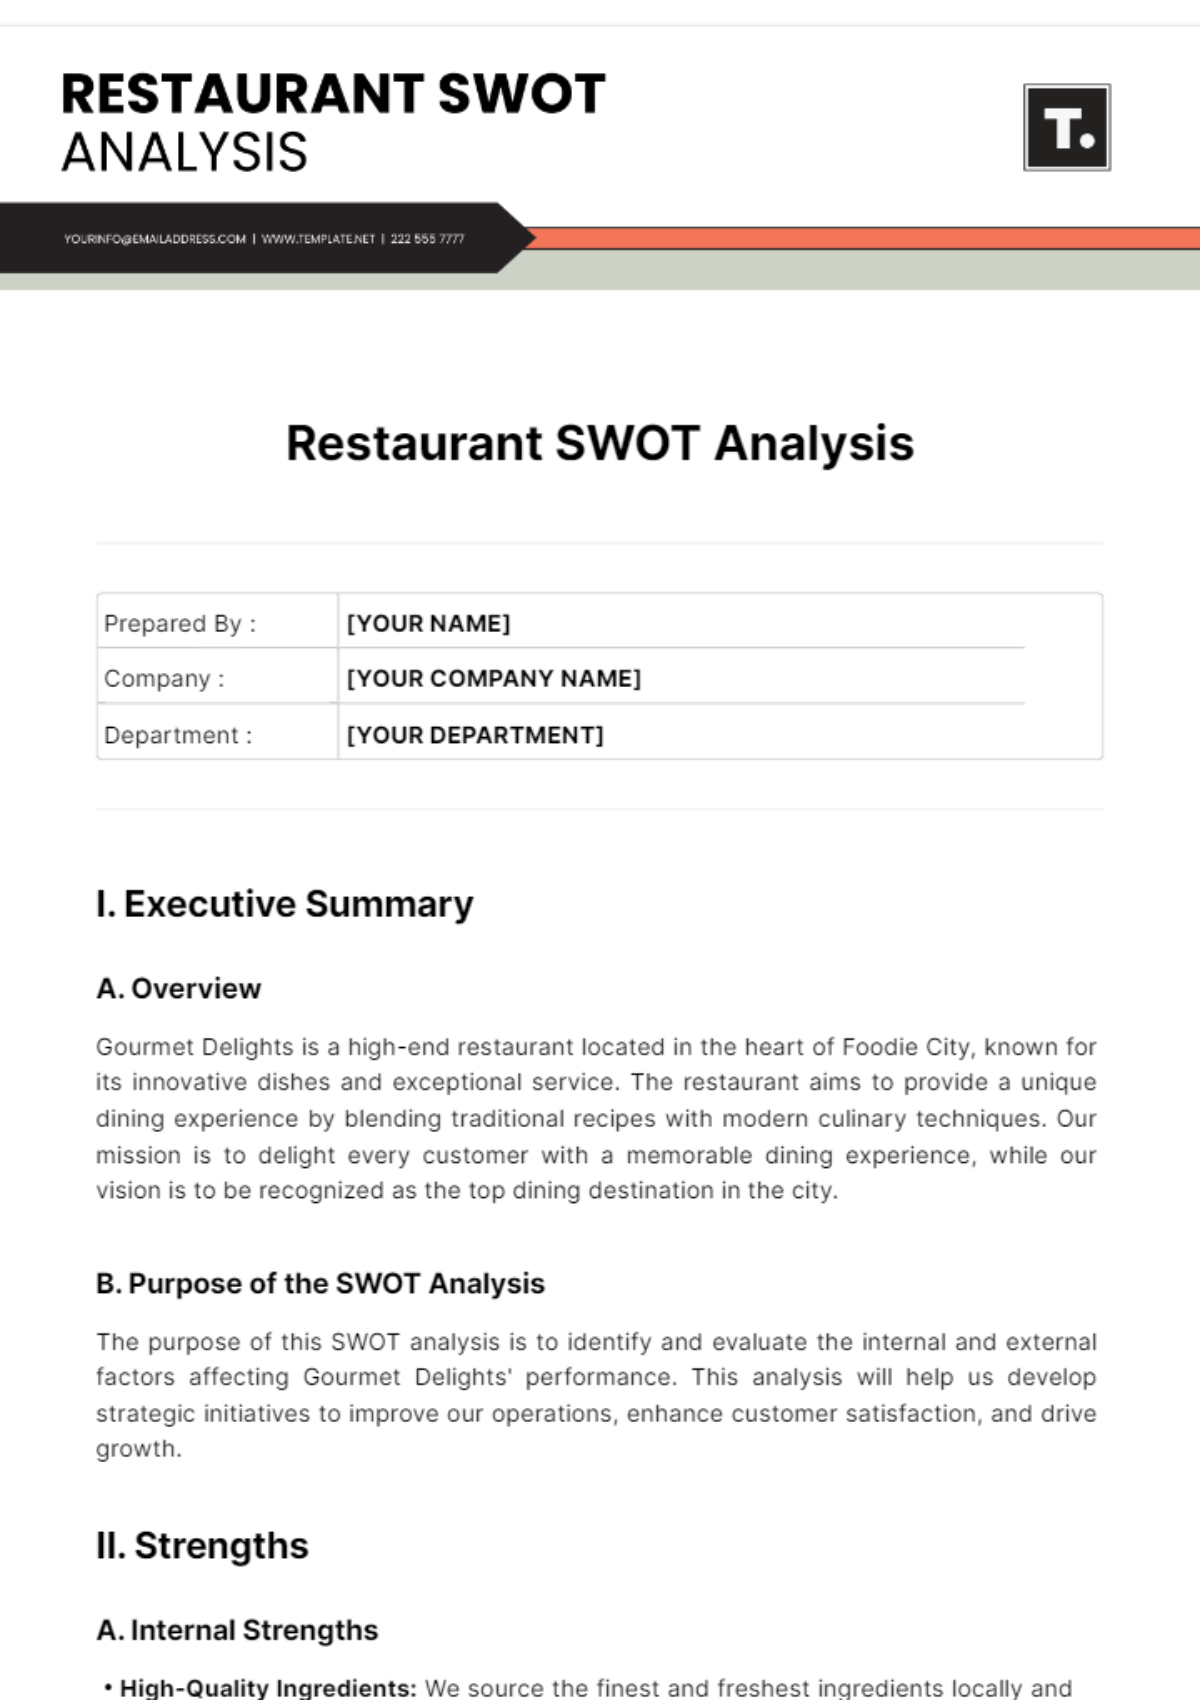 Restaurant SWOT Analysis Template